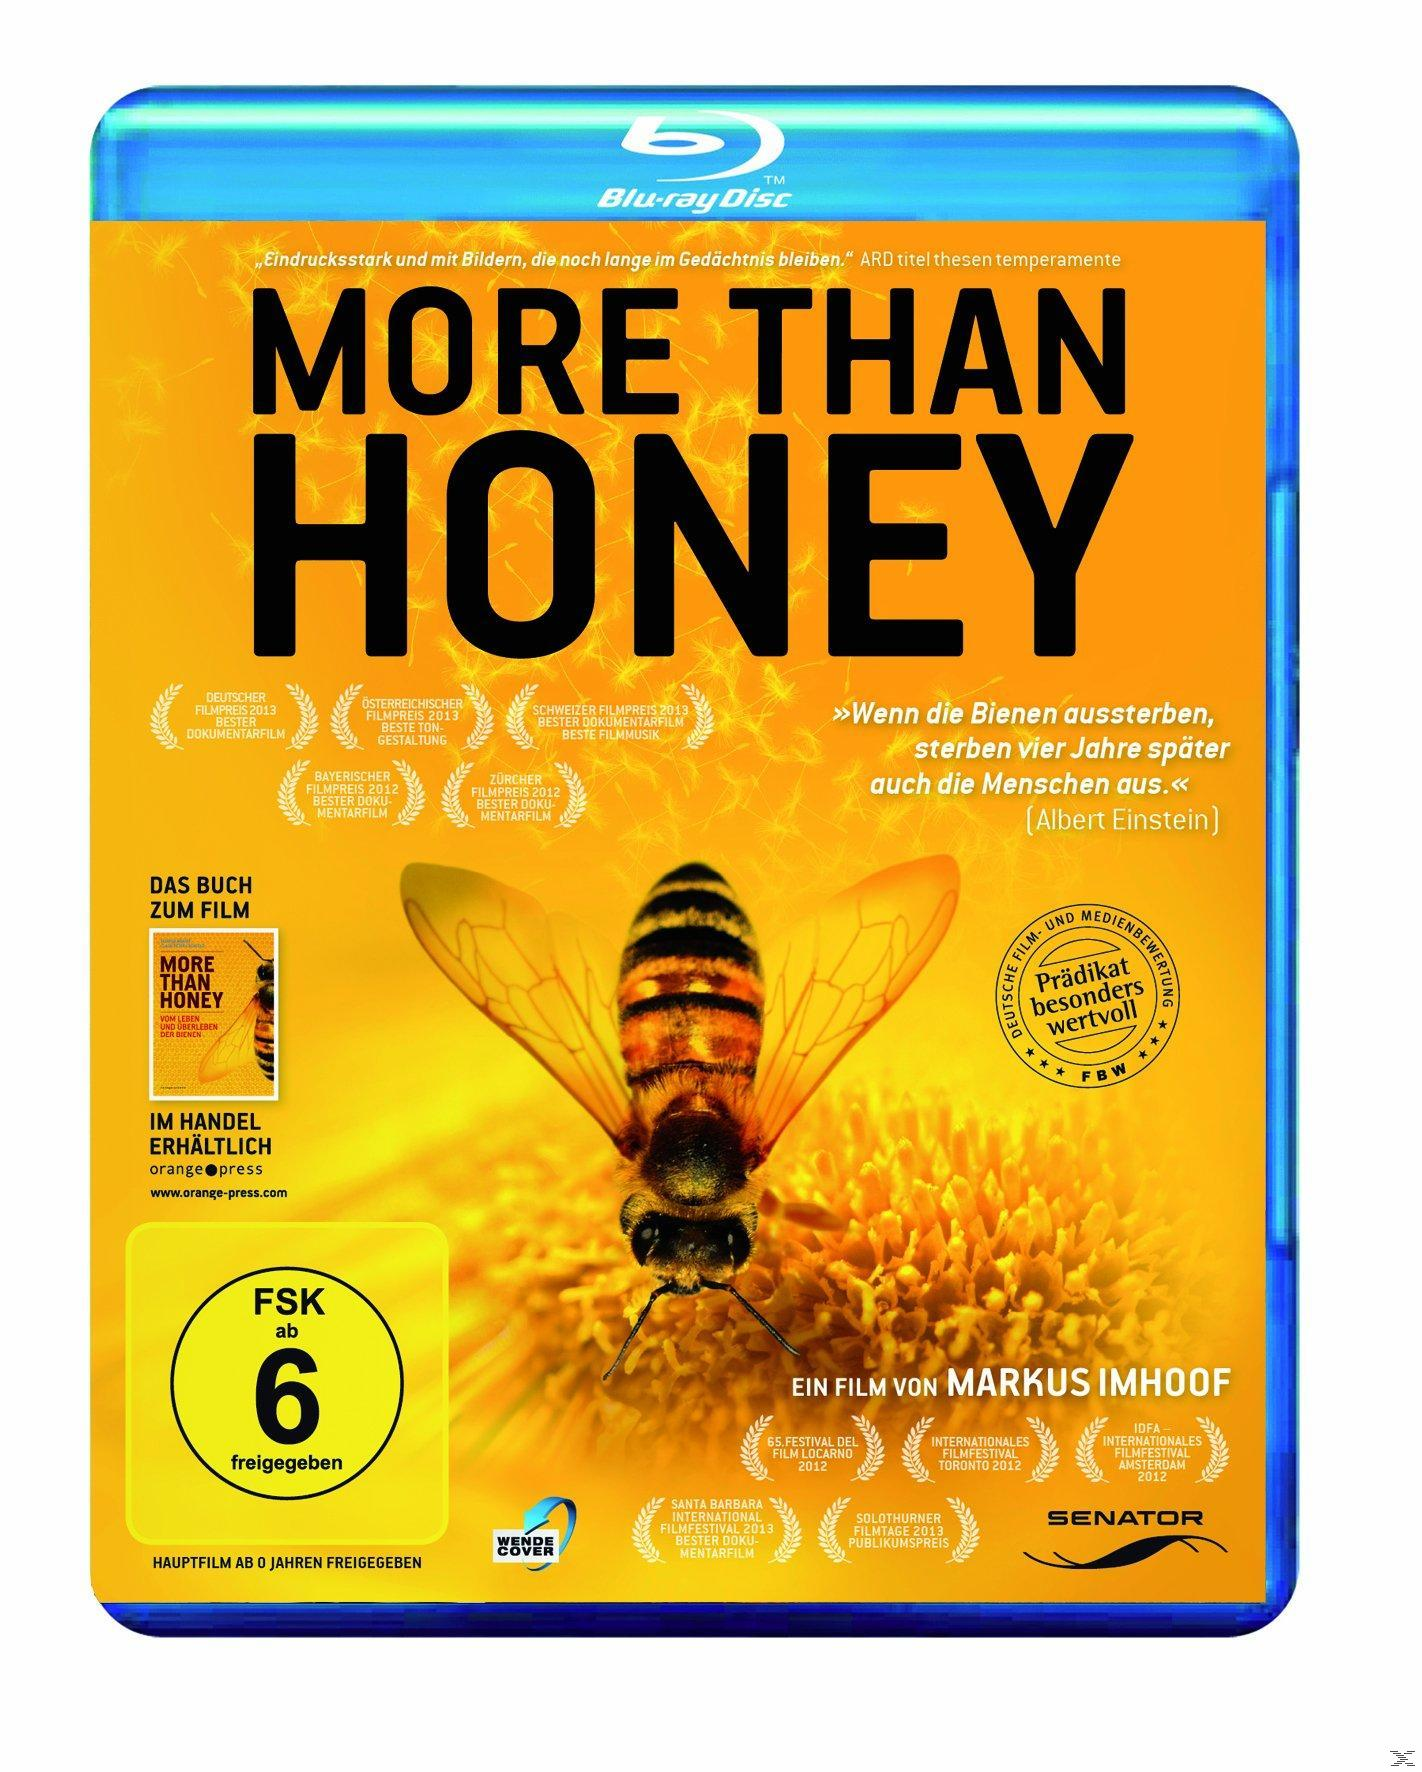 More than Blu-ray Honey